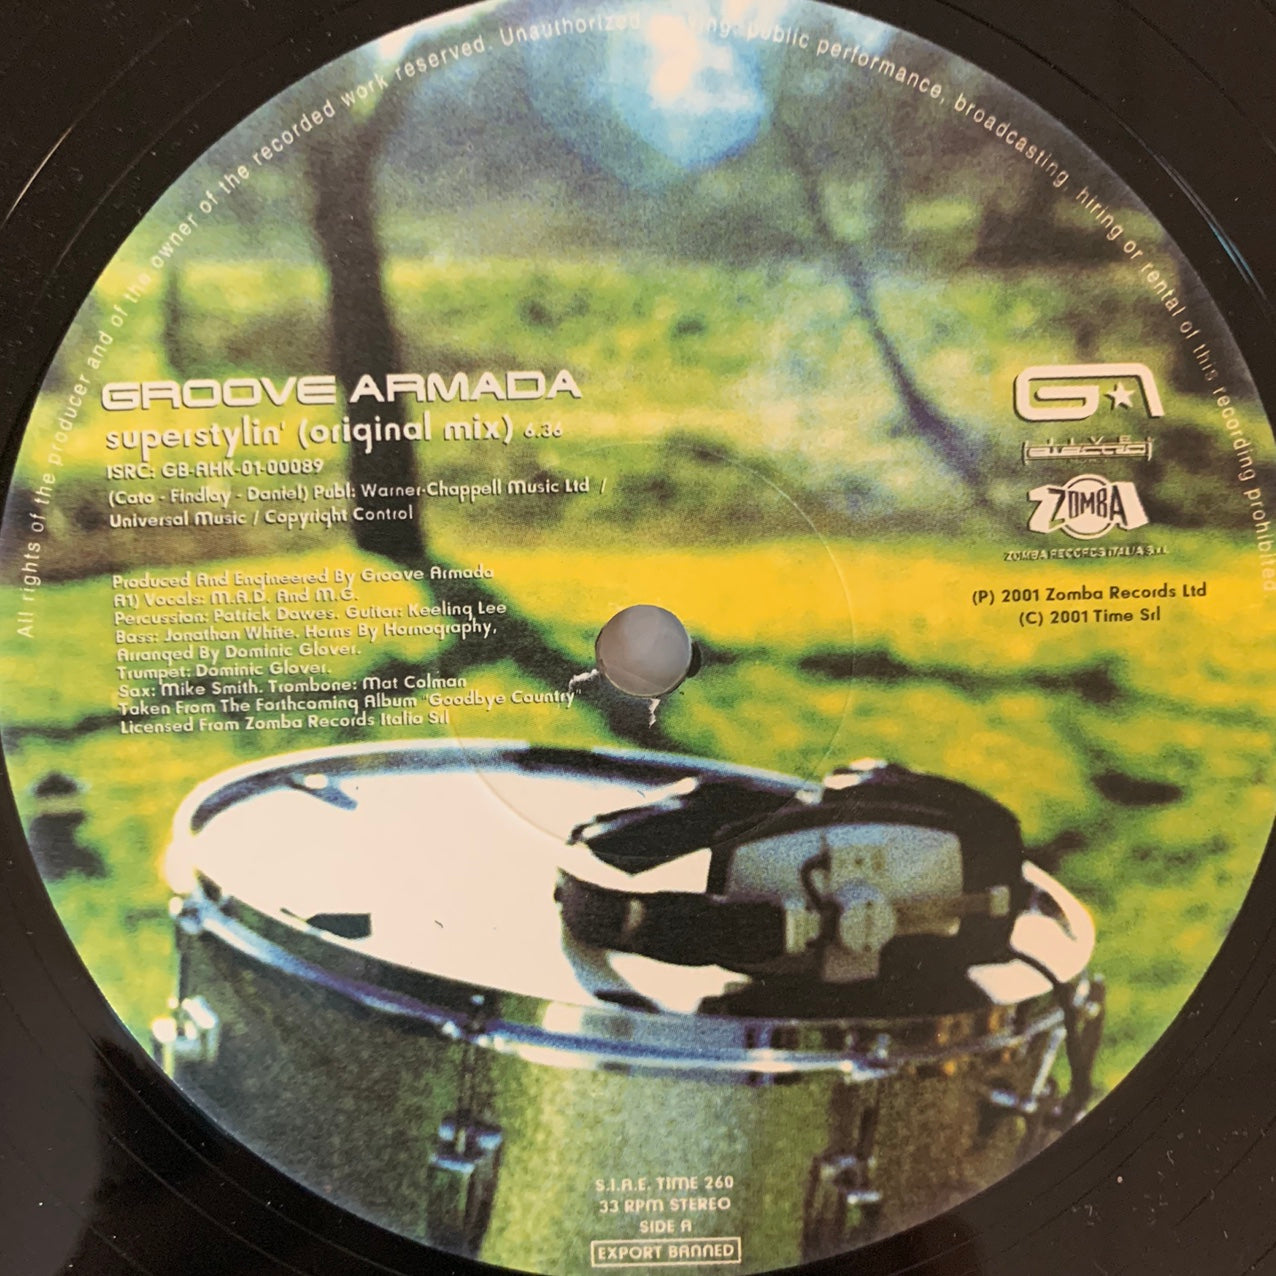 Groove Armada “Superstylin” 2 Version 12inch Vinyl